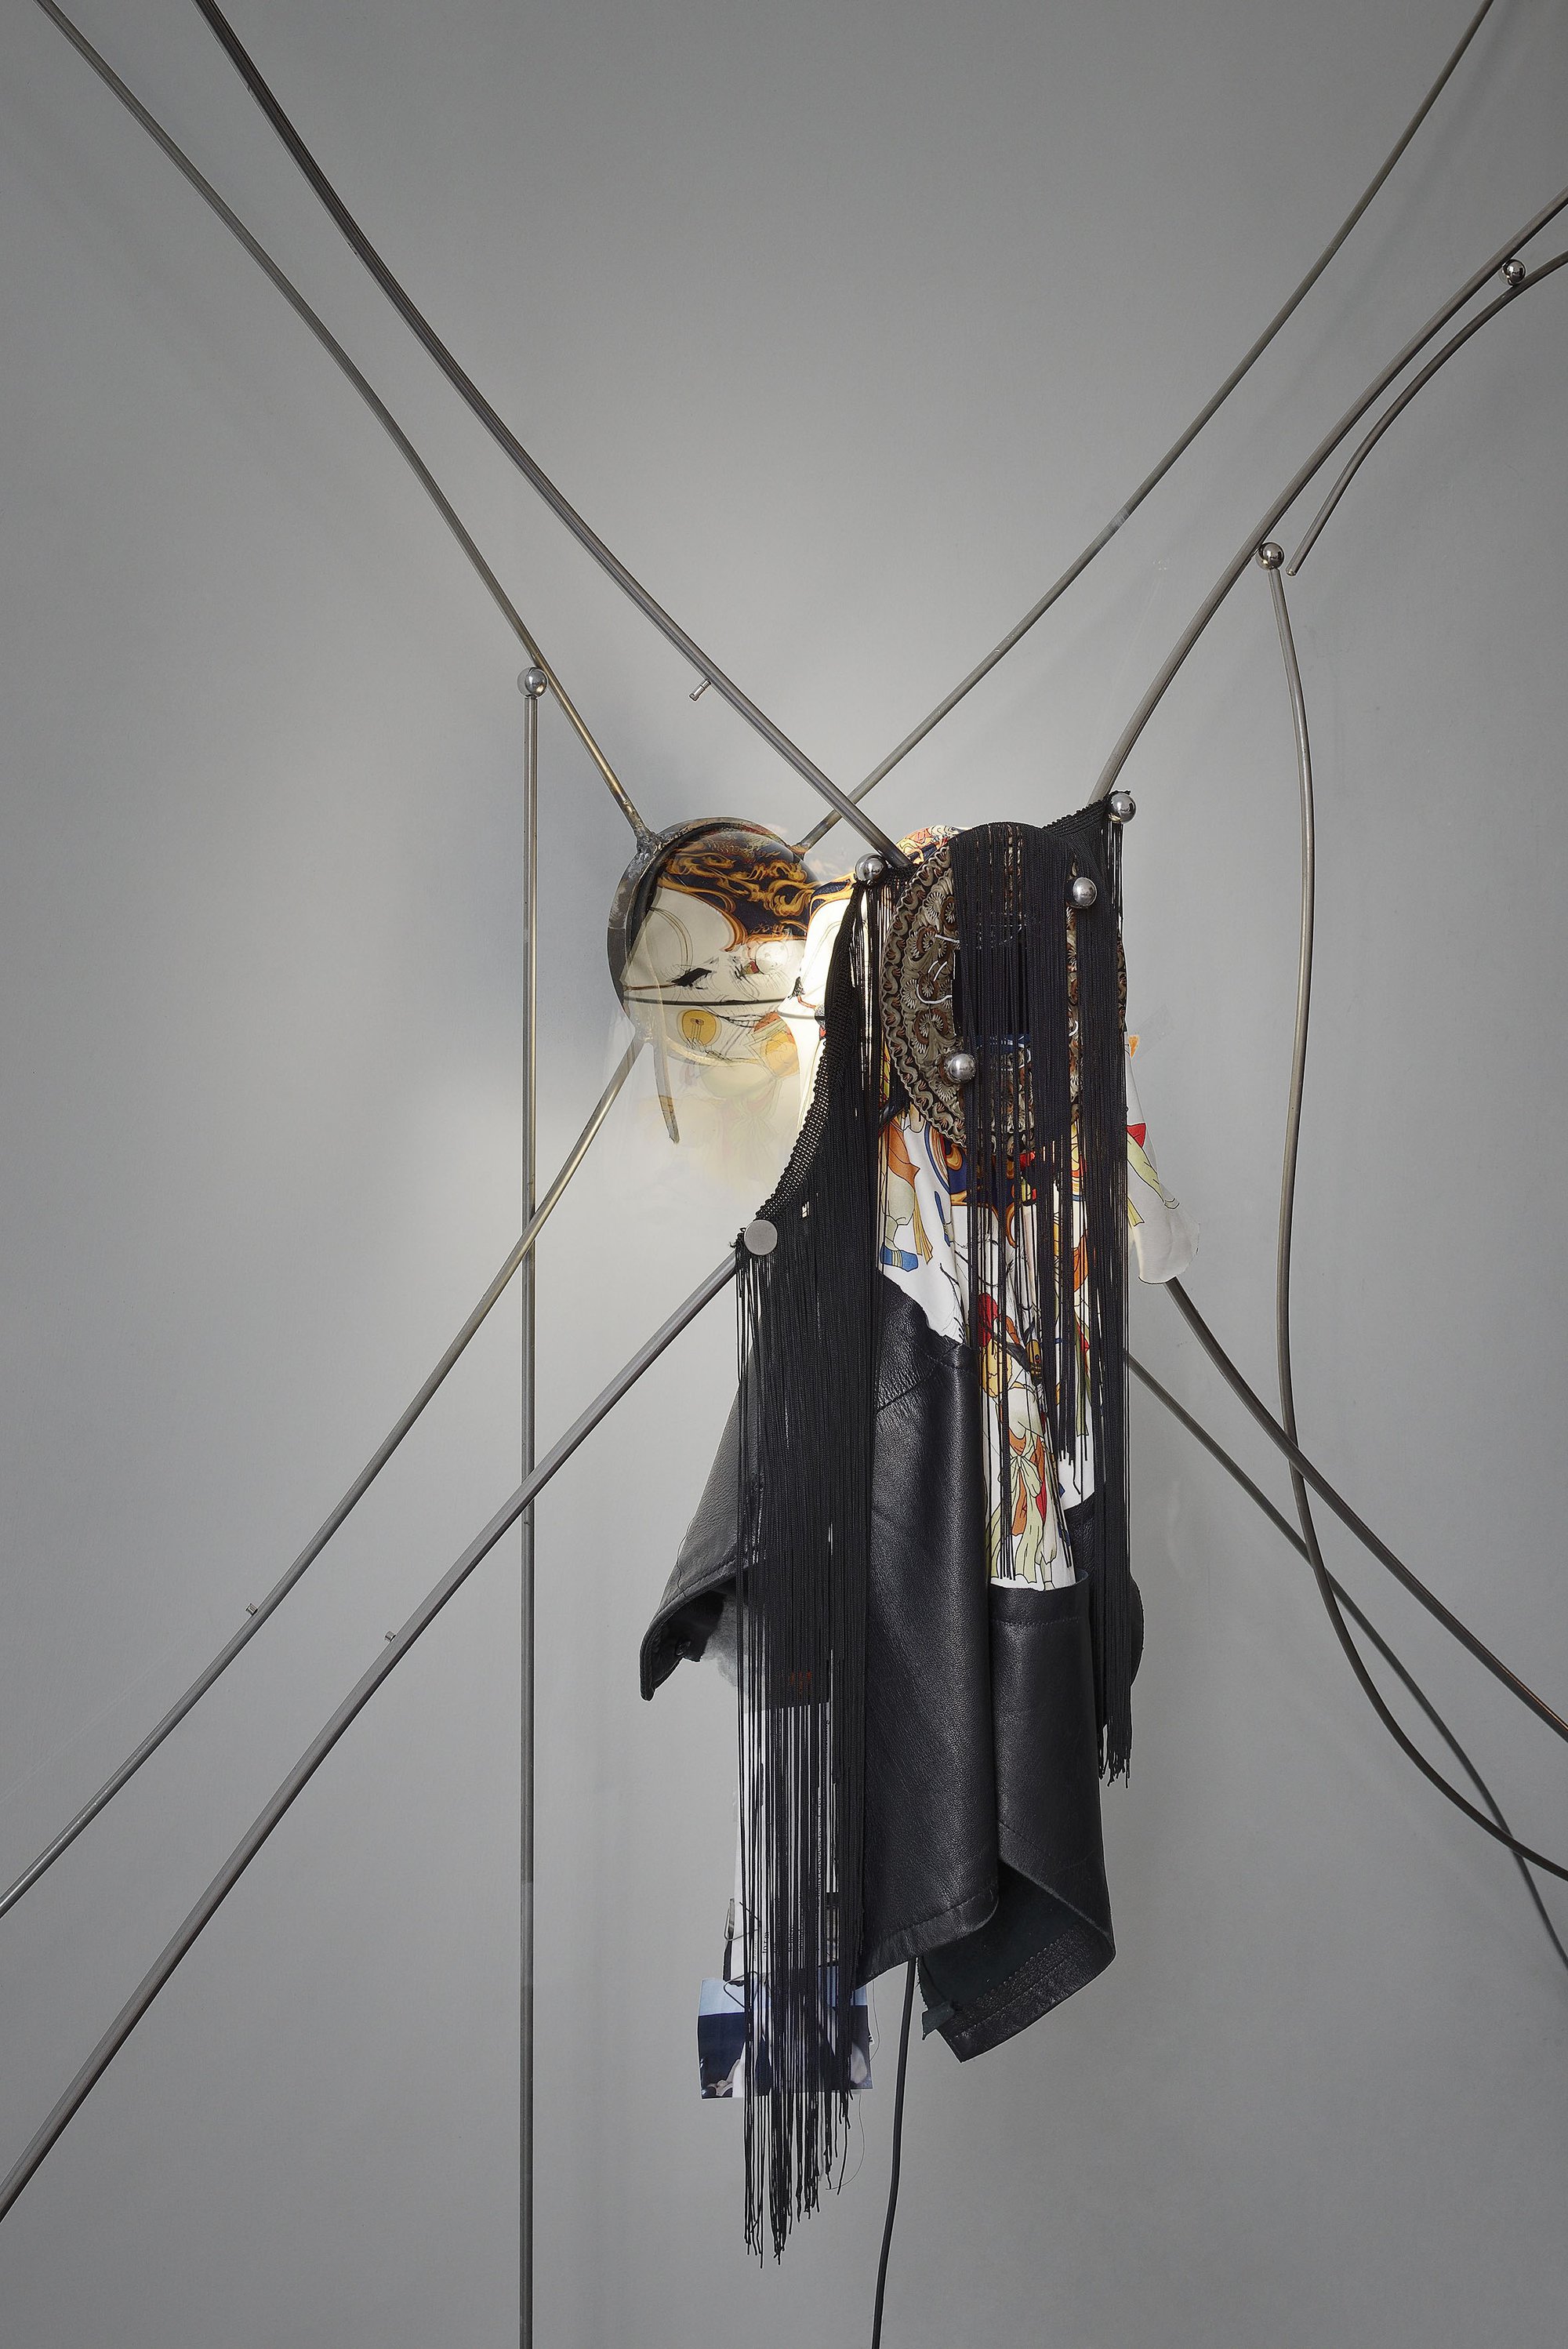 David Douard, Acte de salon, detail, metal, glass, fabric, magnet, light, ceramic mask, 2018